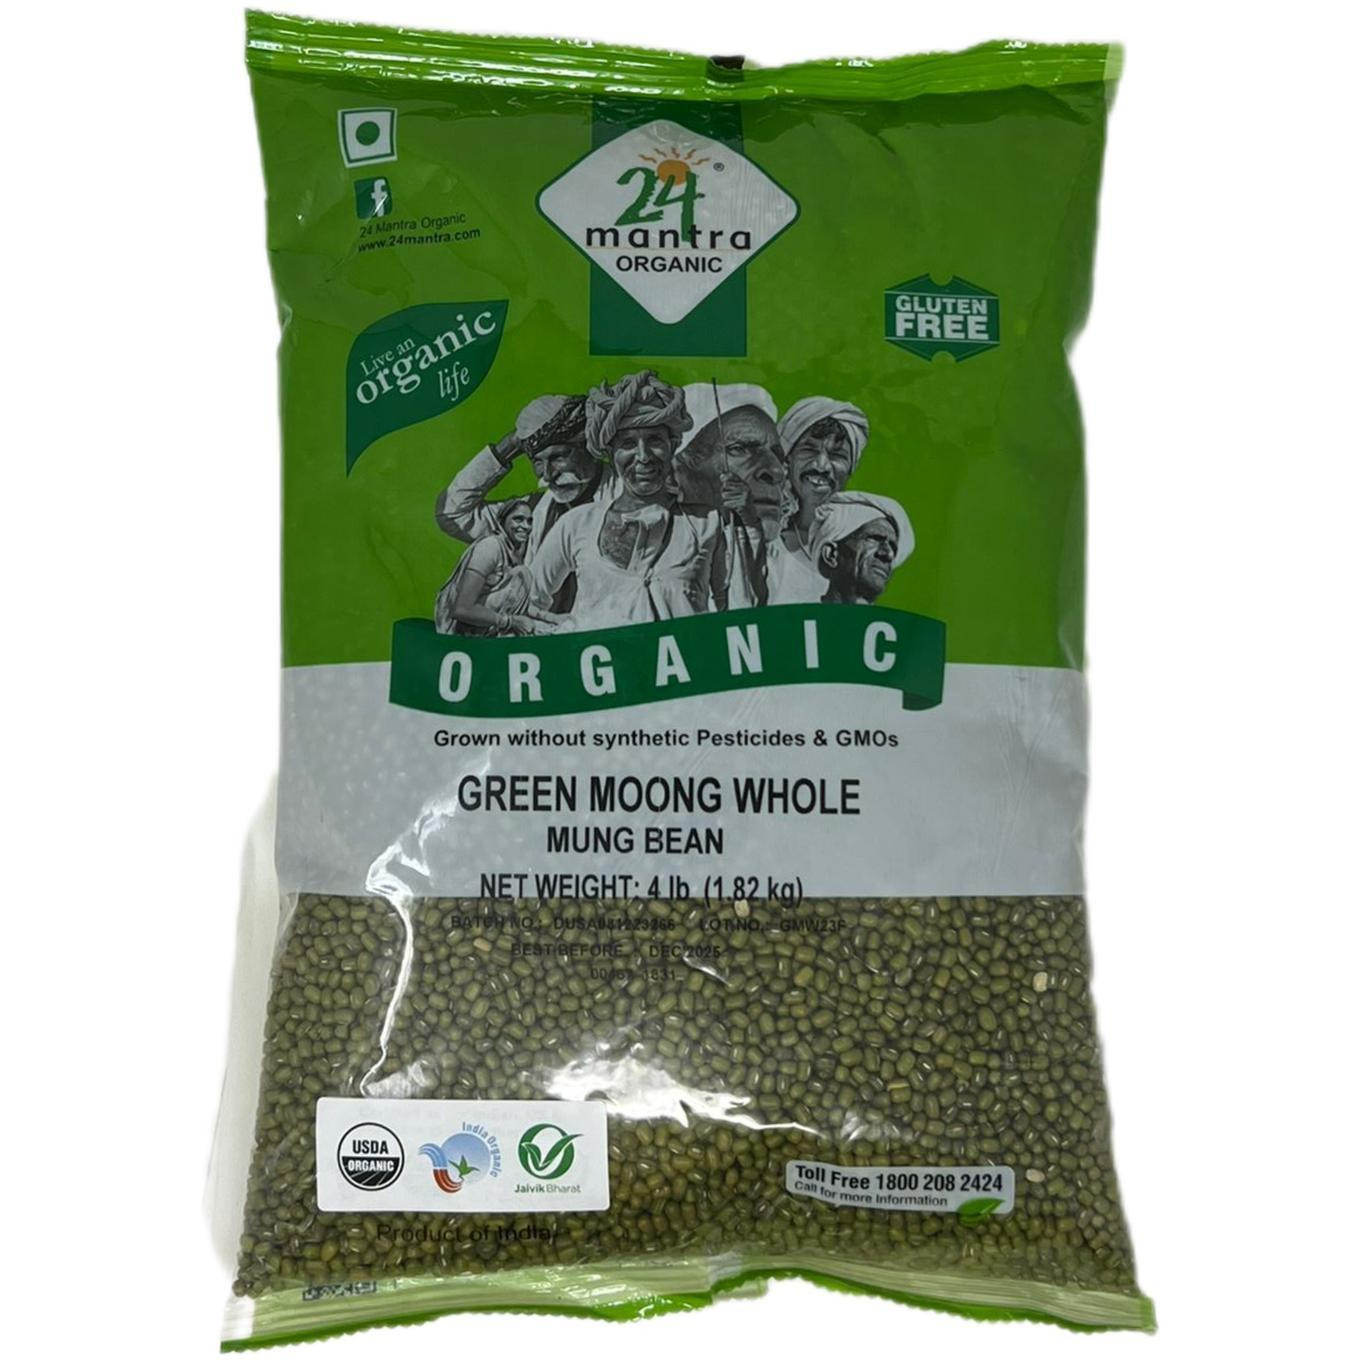 Case of 10 - 24 Mantra Organic Green Mung Bean - 4 Lb (1.82 Kg)